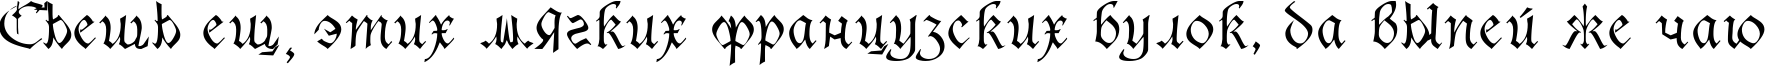 Пример написания шрифтом Sanasoft Gothic.kz текста на русском